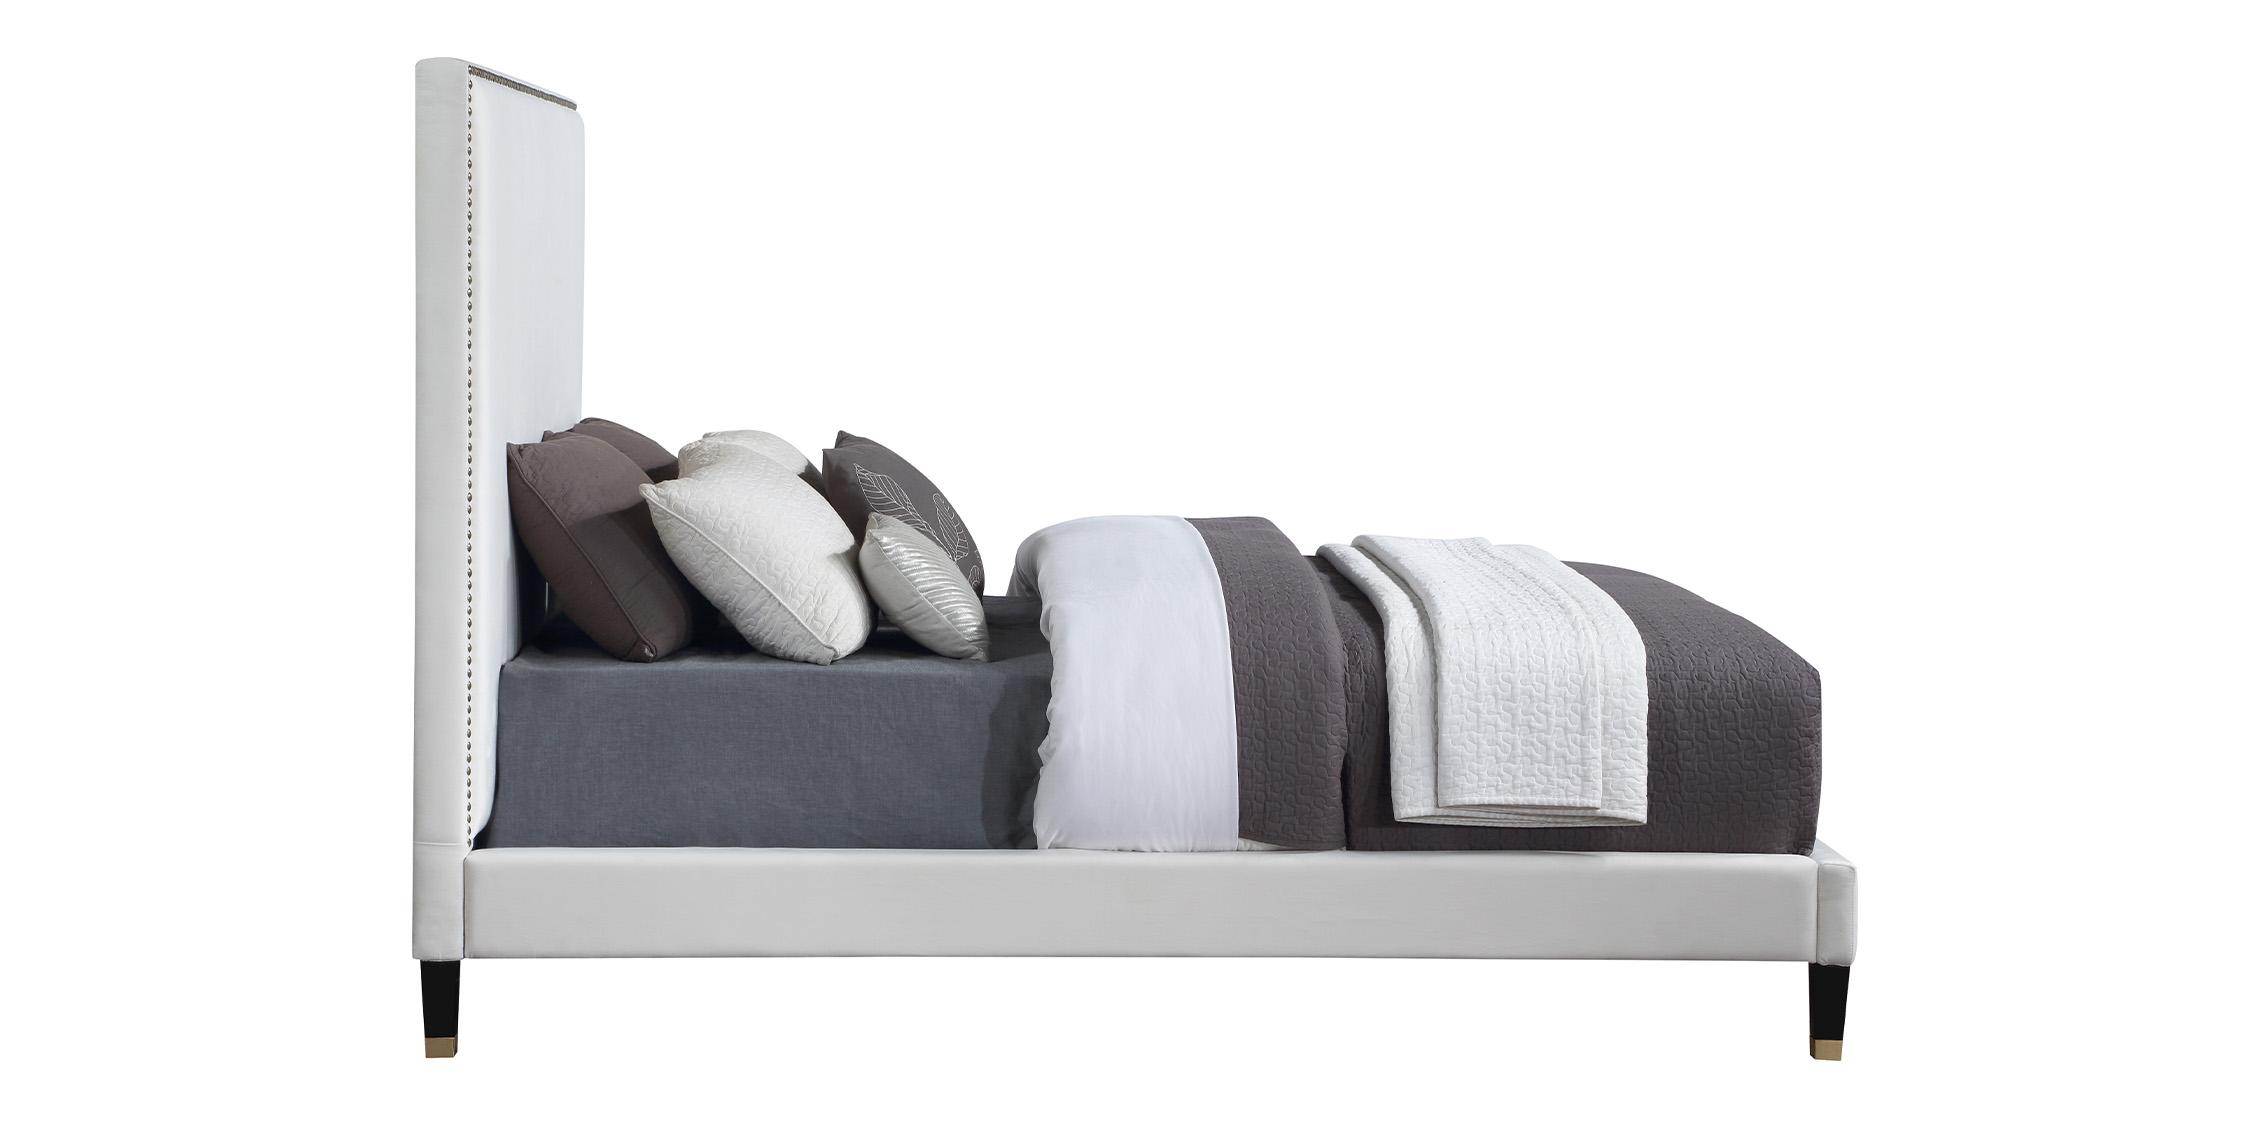 

    
HarlieCream-Q Meridian Furniture Platform Bed
